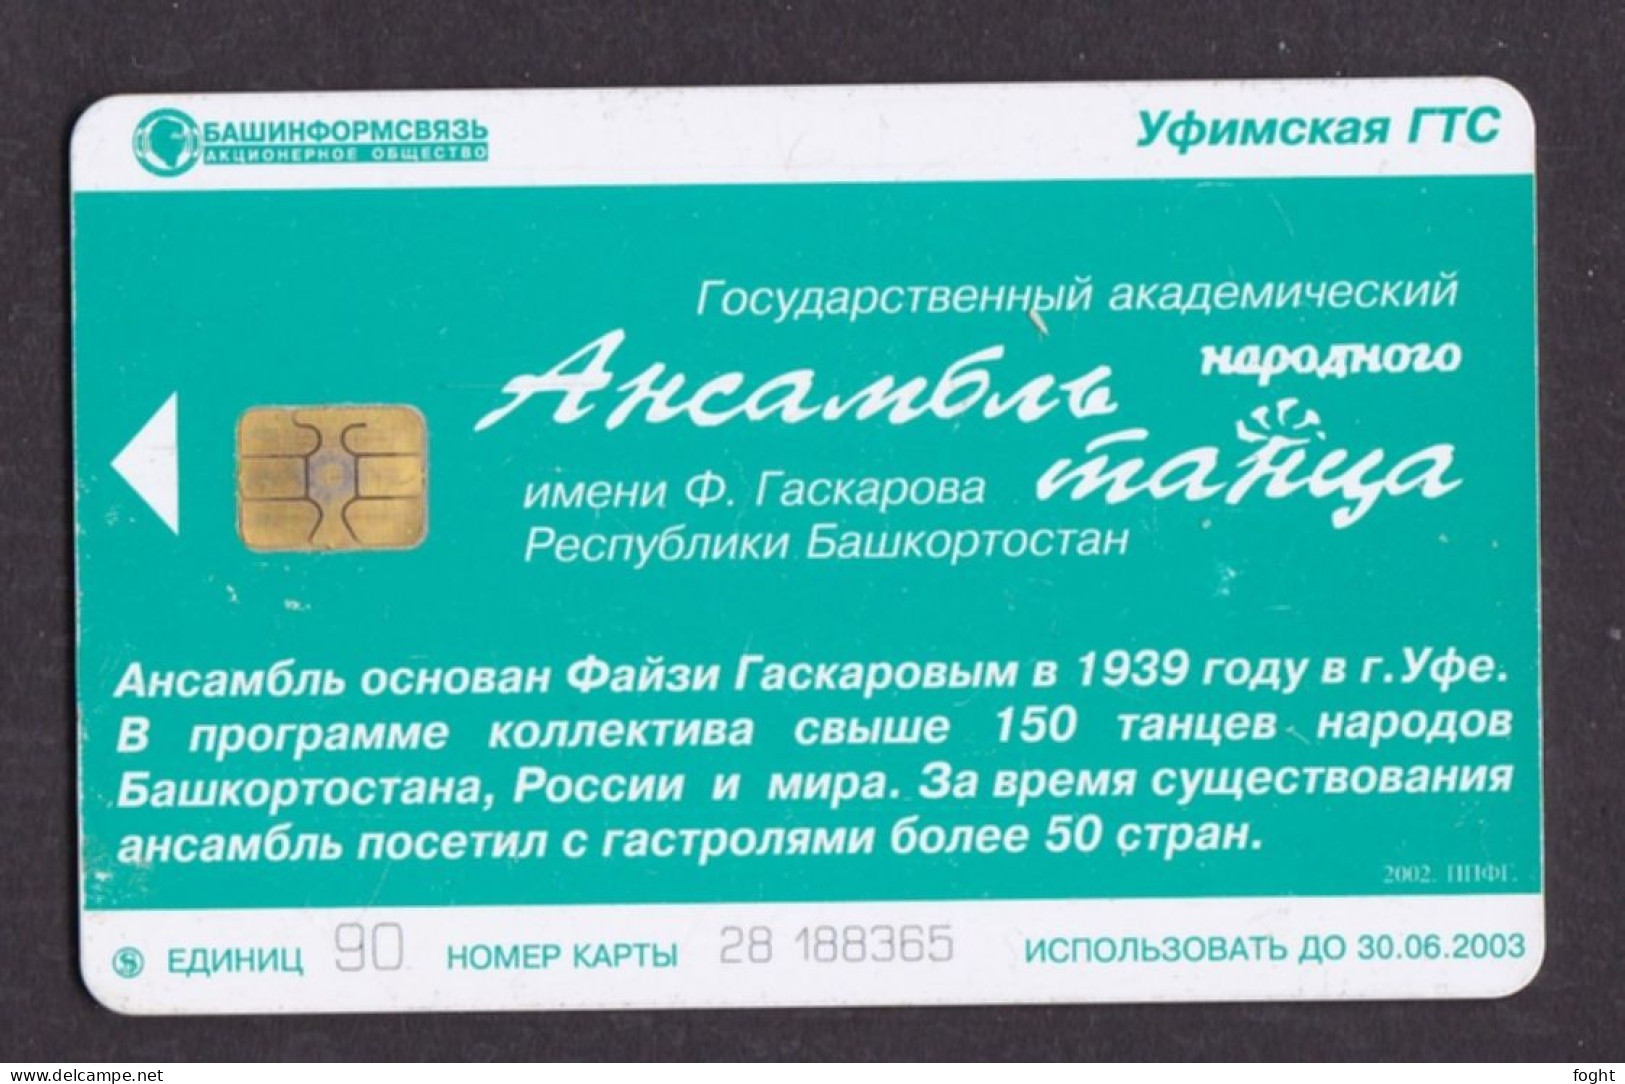 2002 Russia Bashinformsvyaz-Ufa,Tatar Dance "Bridegroom",90 Units Card,Col:RU-BIS-V-006 - Russia